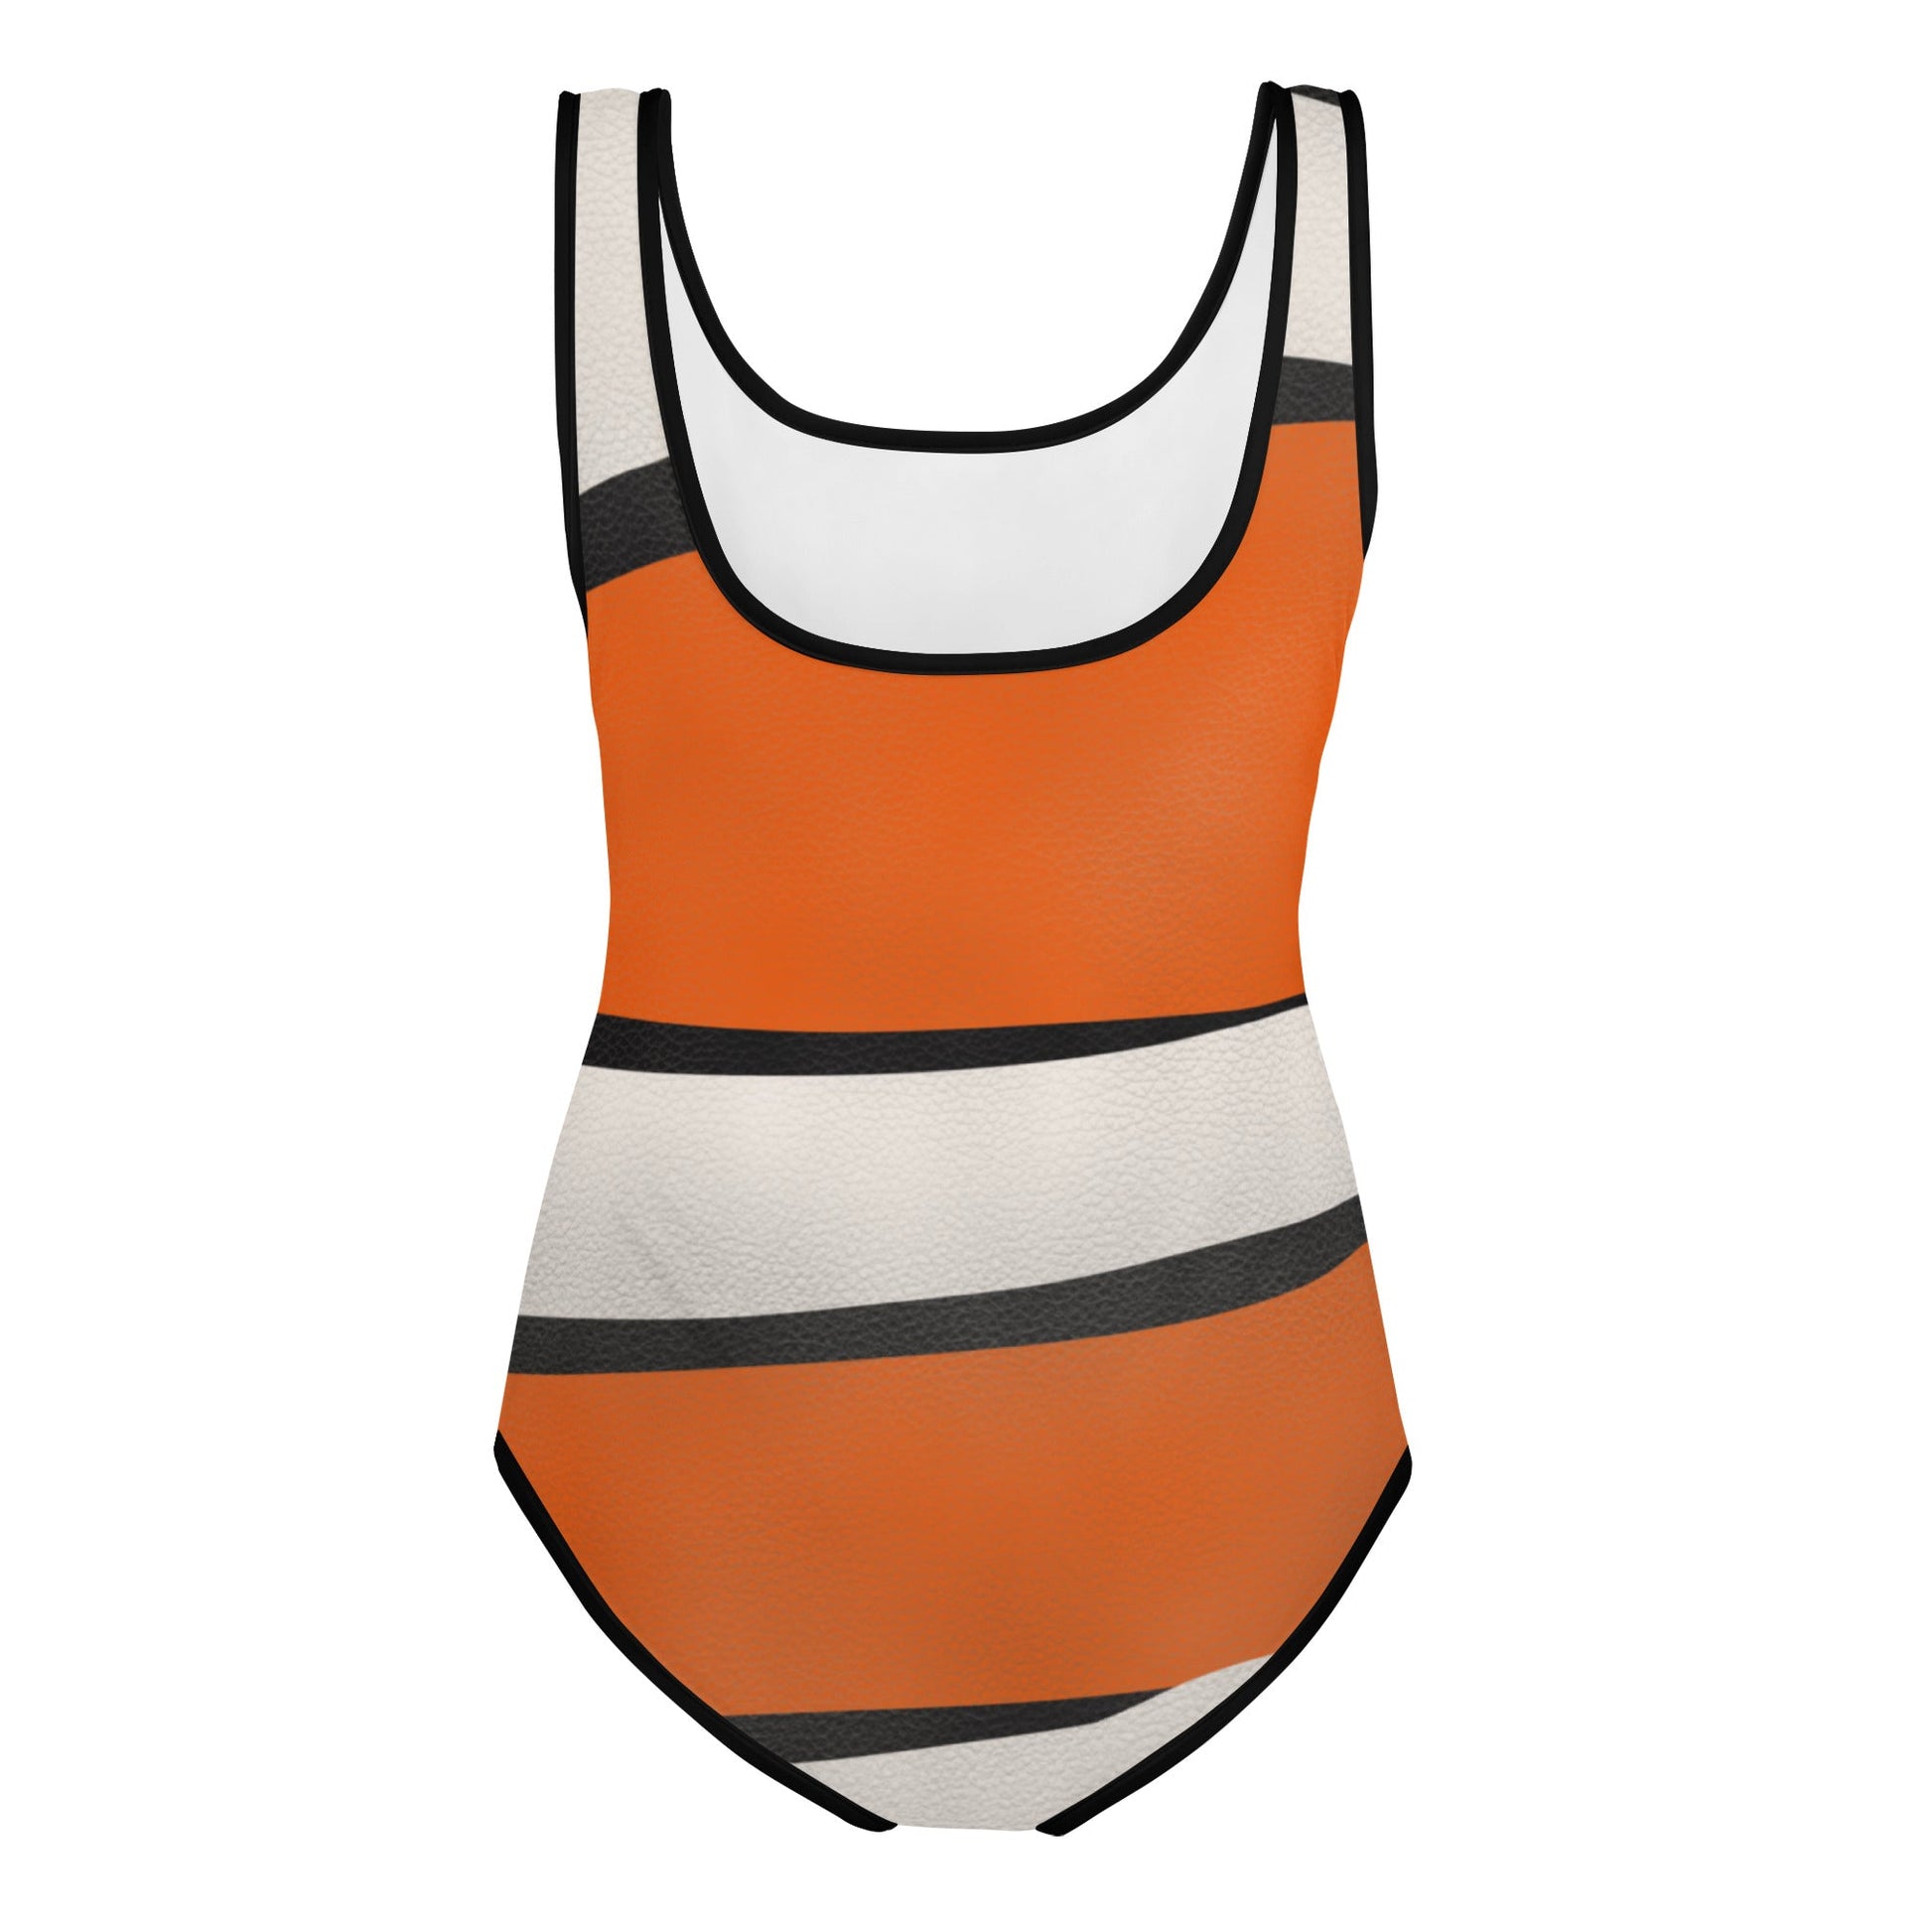 The Nemo Youth Swimsuit disney beachdisney boundingWrong Lever Clothing